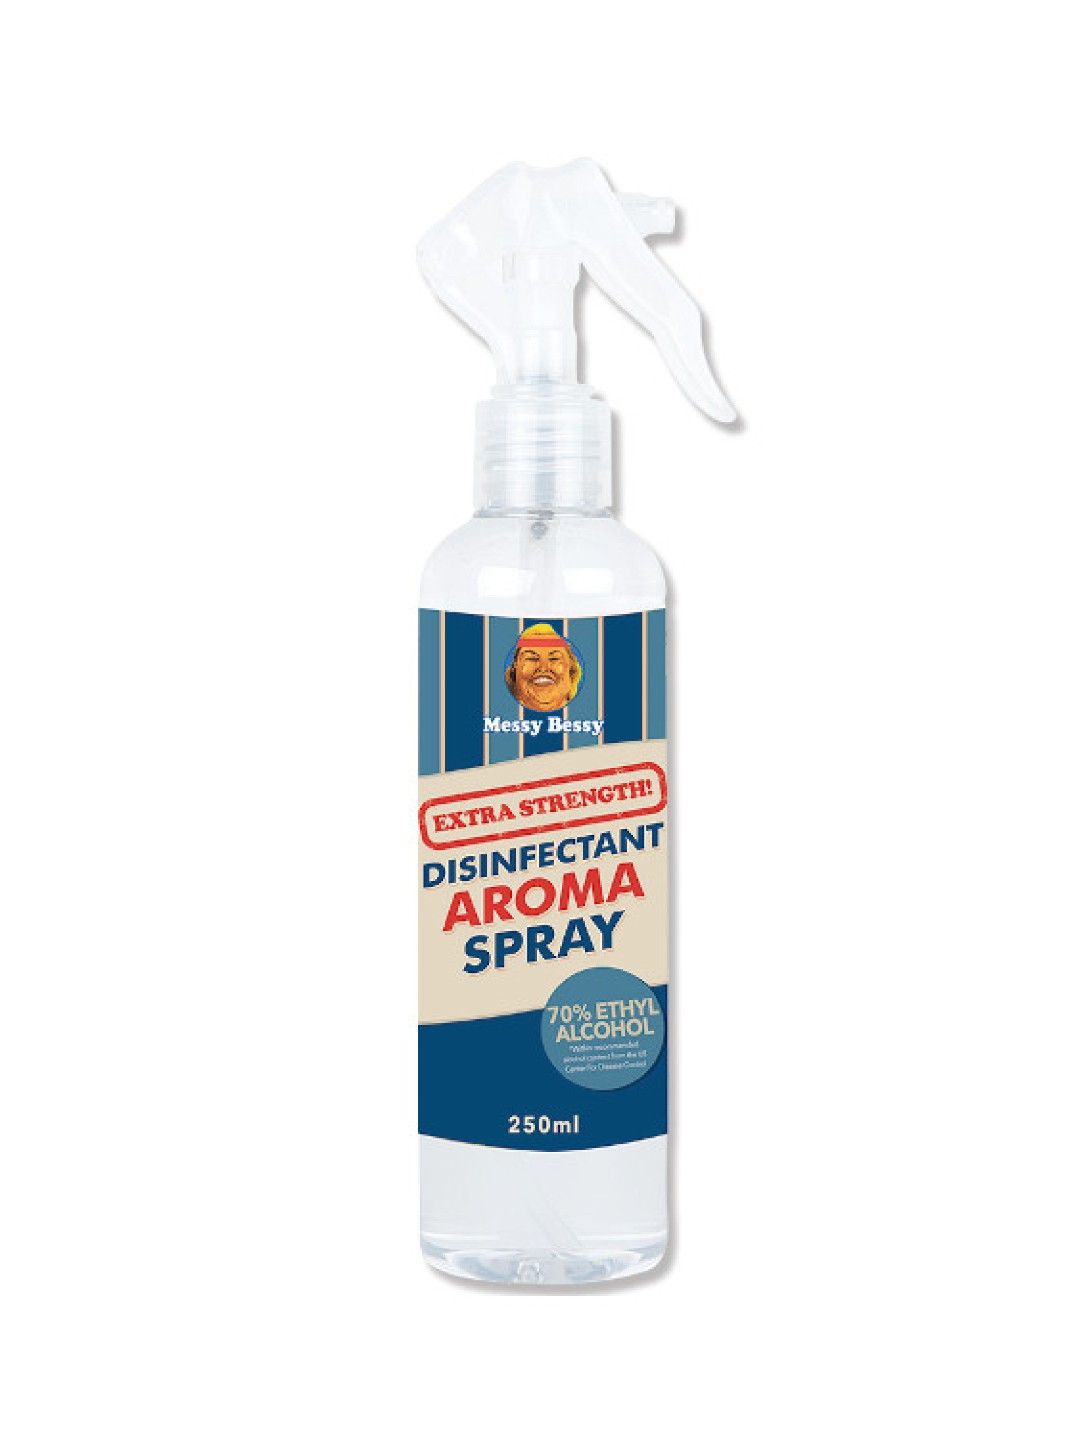 Messy Bessy Disinfectant Aroma Spray Extra Strength (250ml)